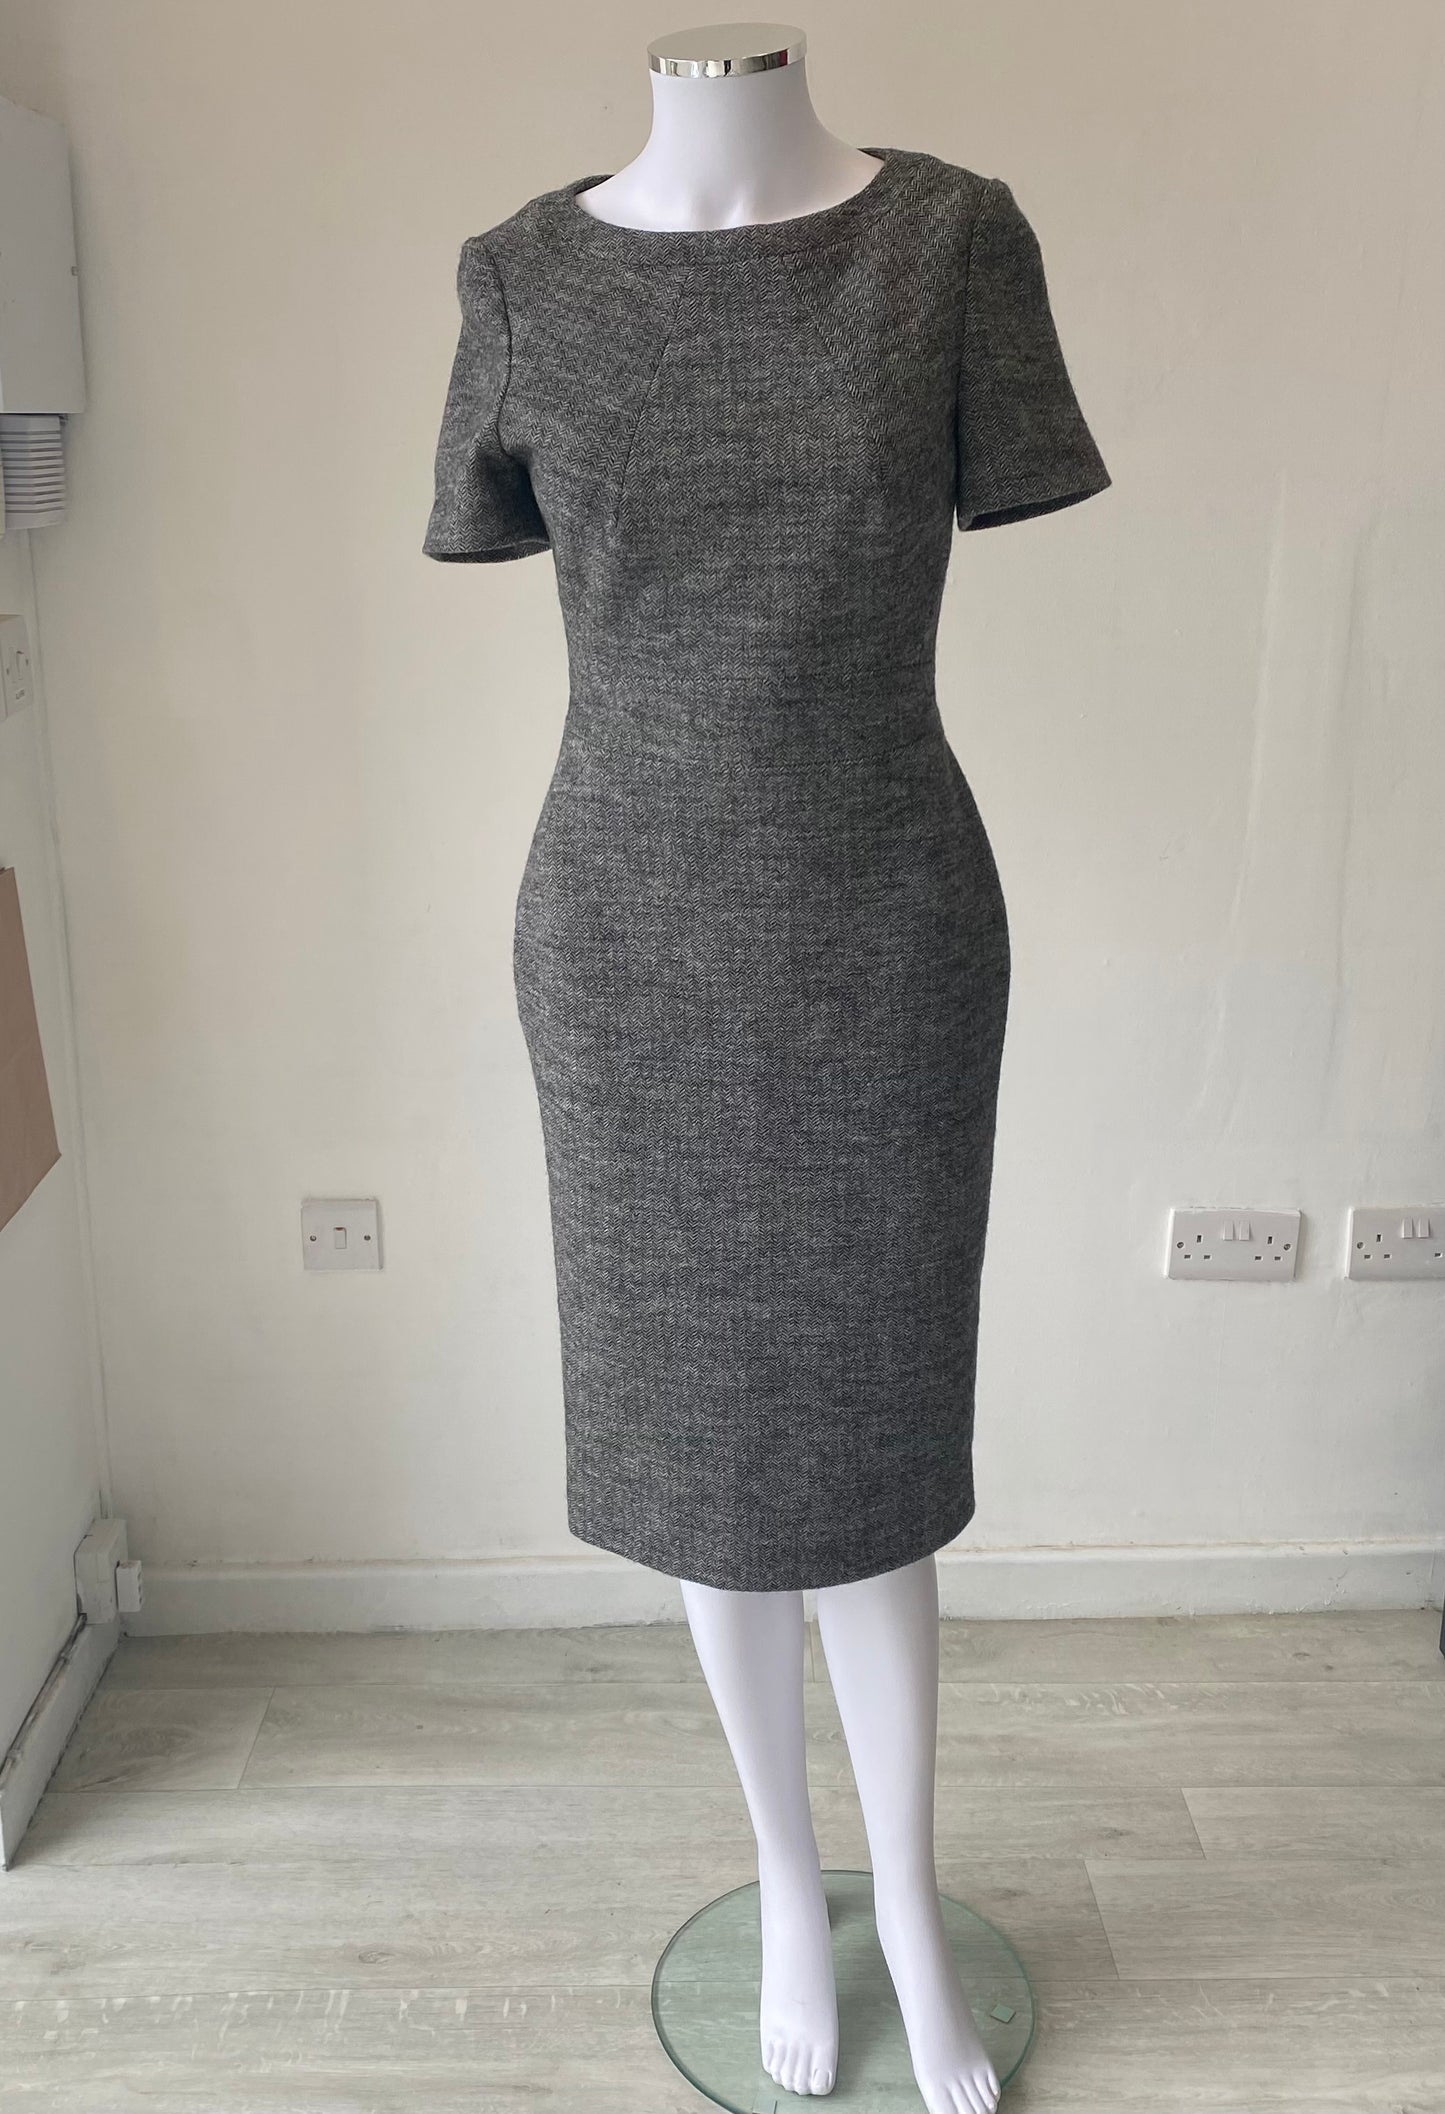 Hobbs Tweed Dress Size 8